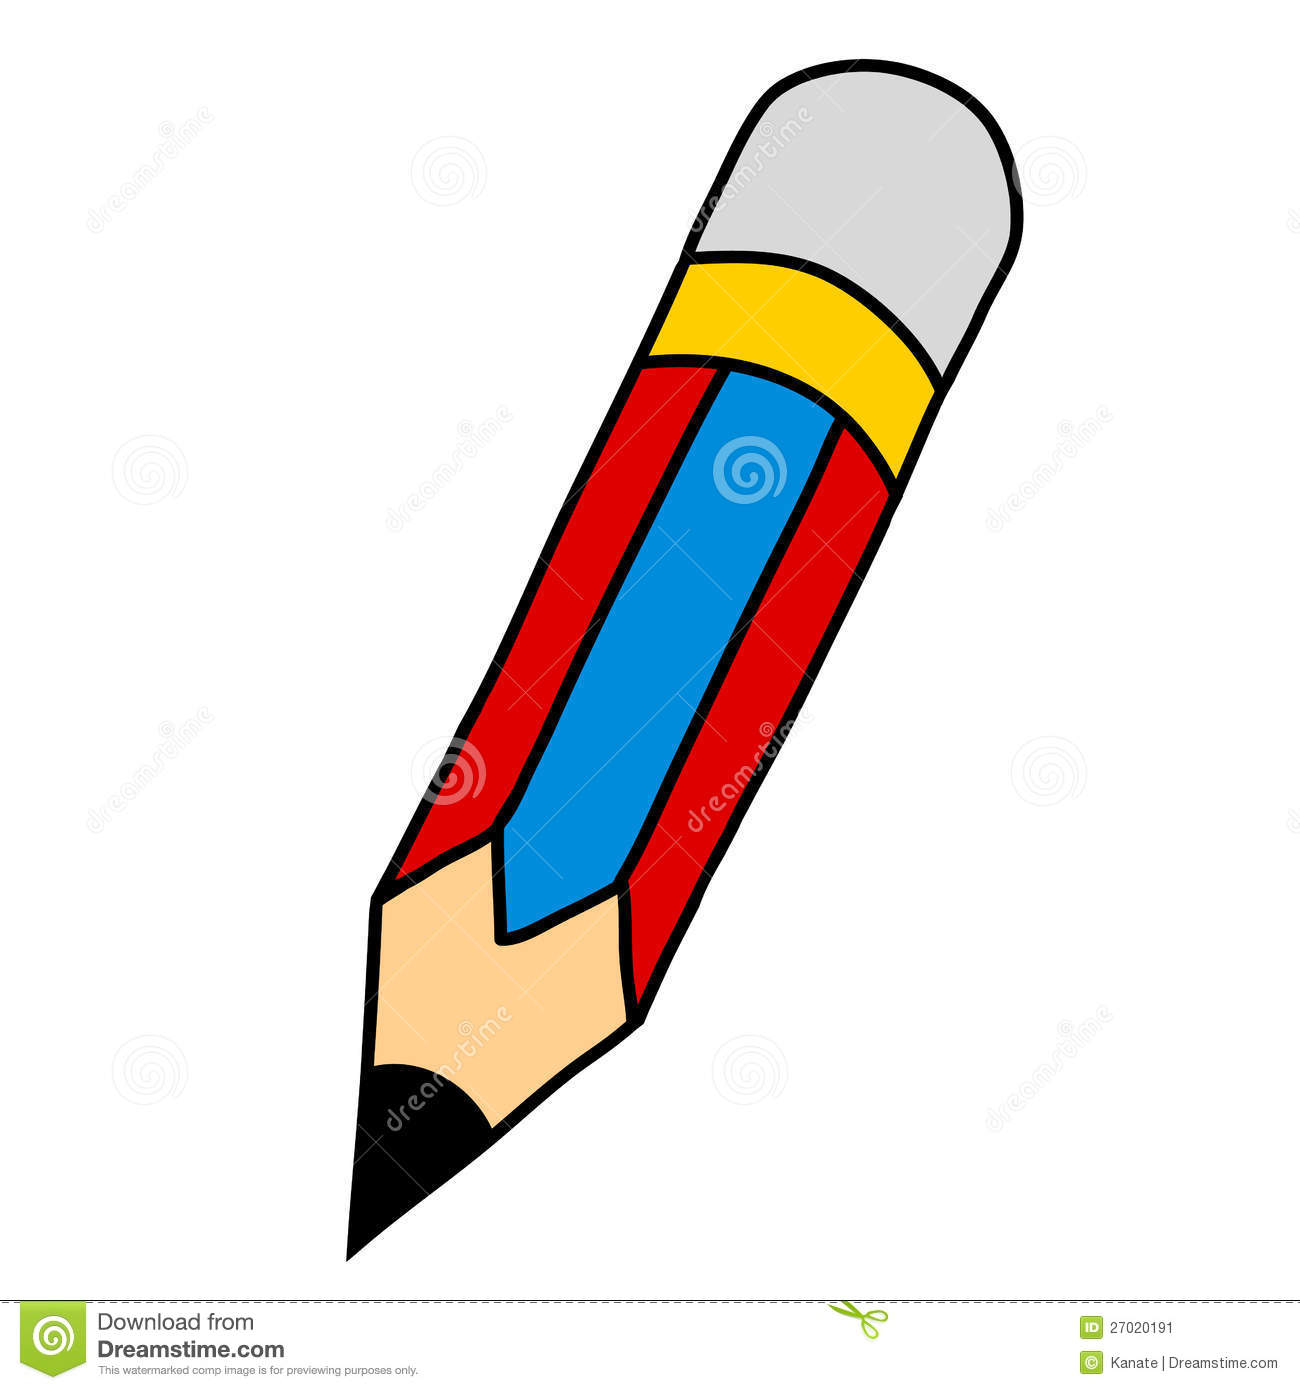 Cartoon Pencil Hand Writing  Stock Image   Image  27020191